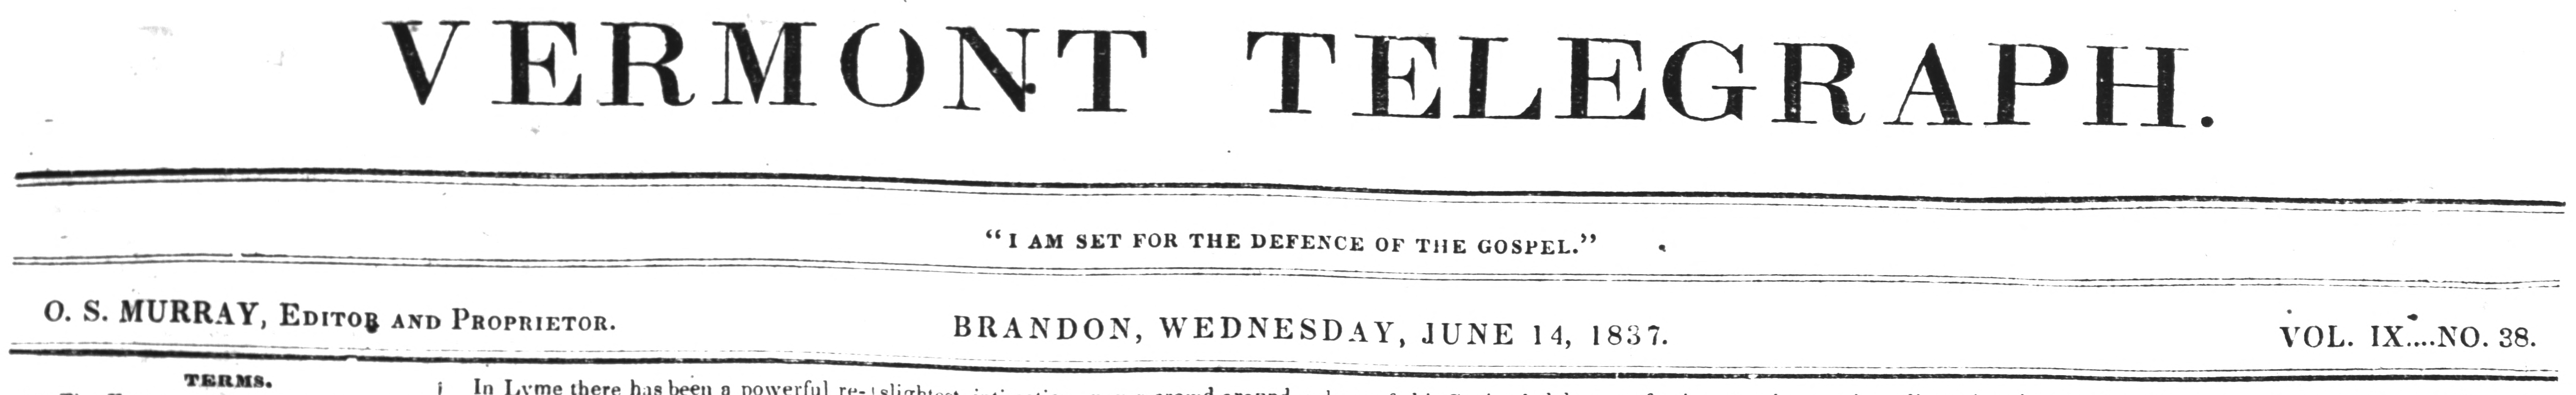 vermont telegraph